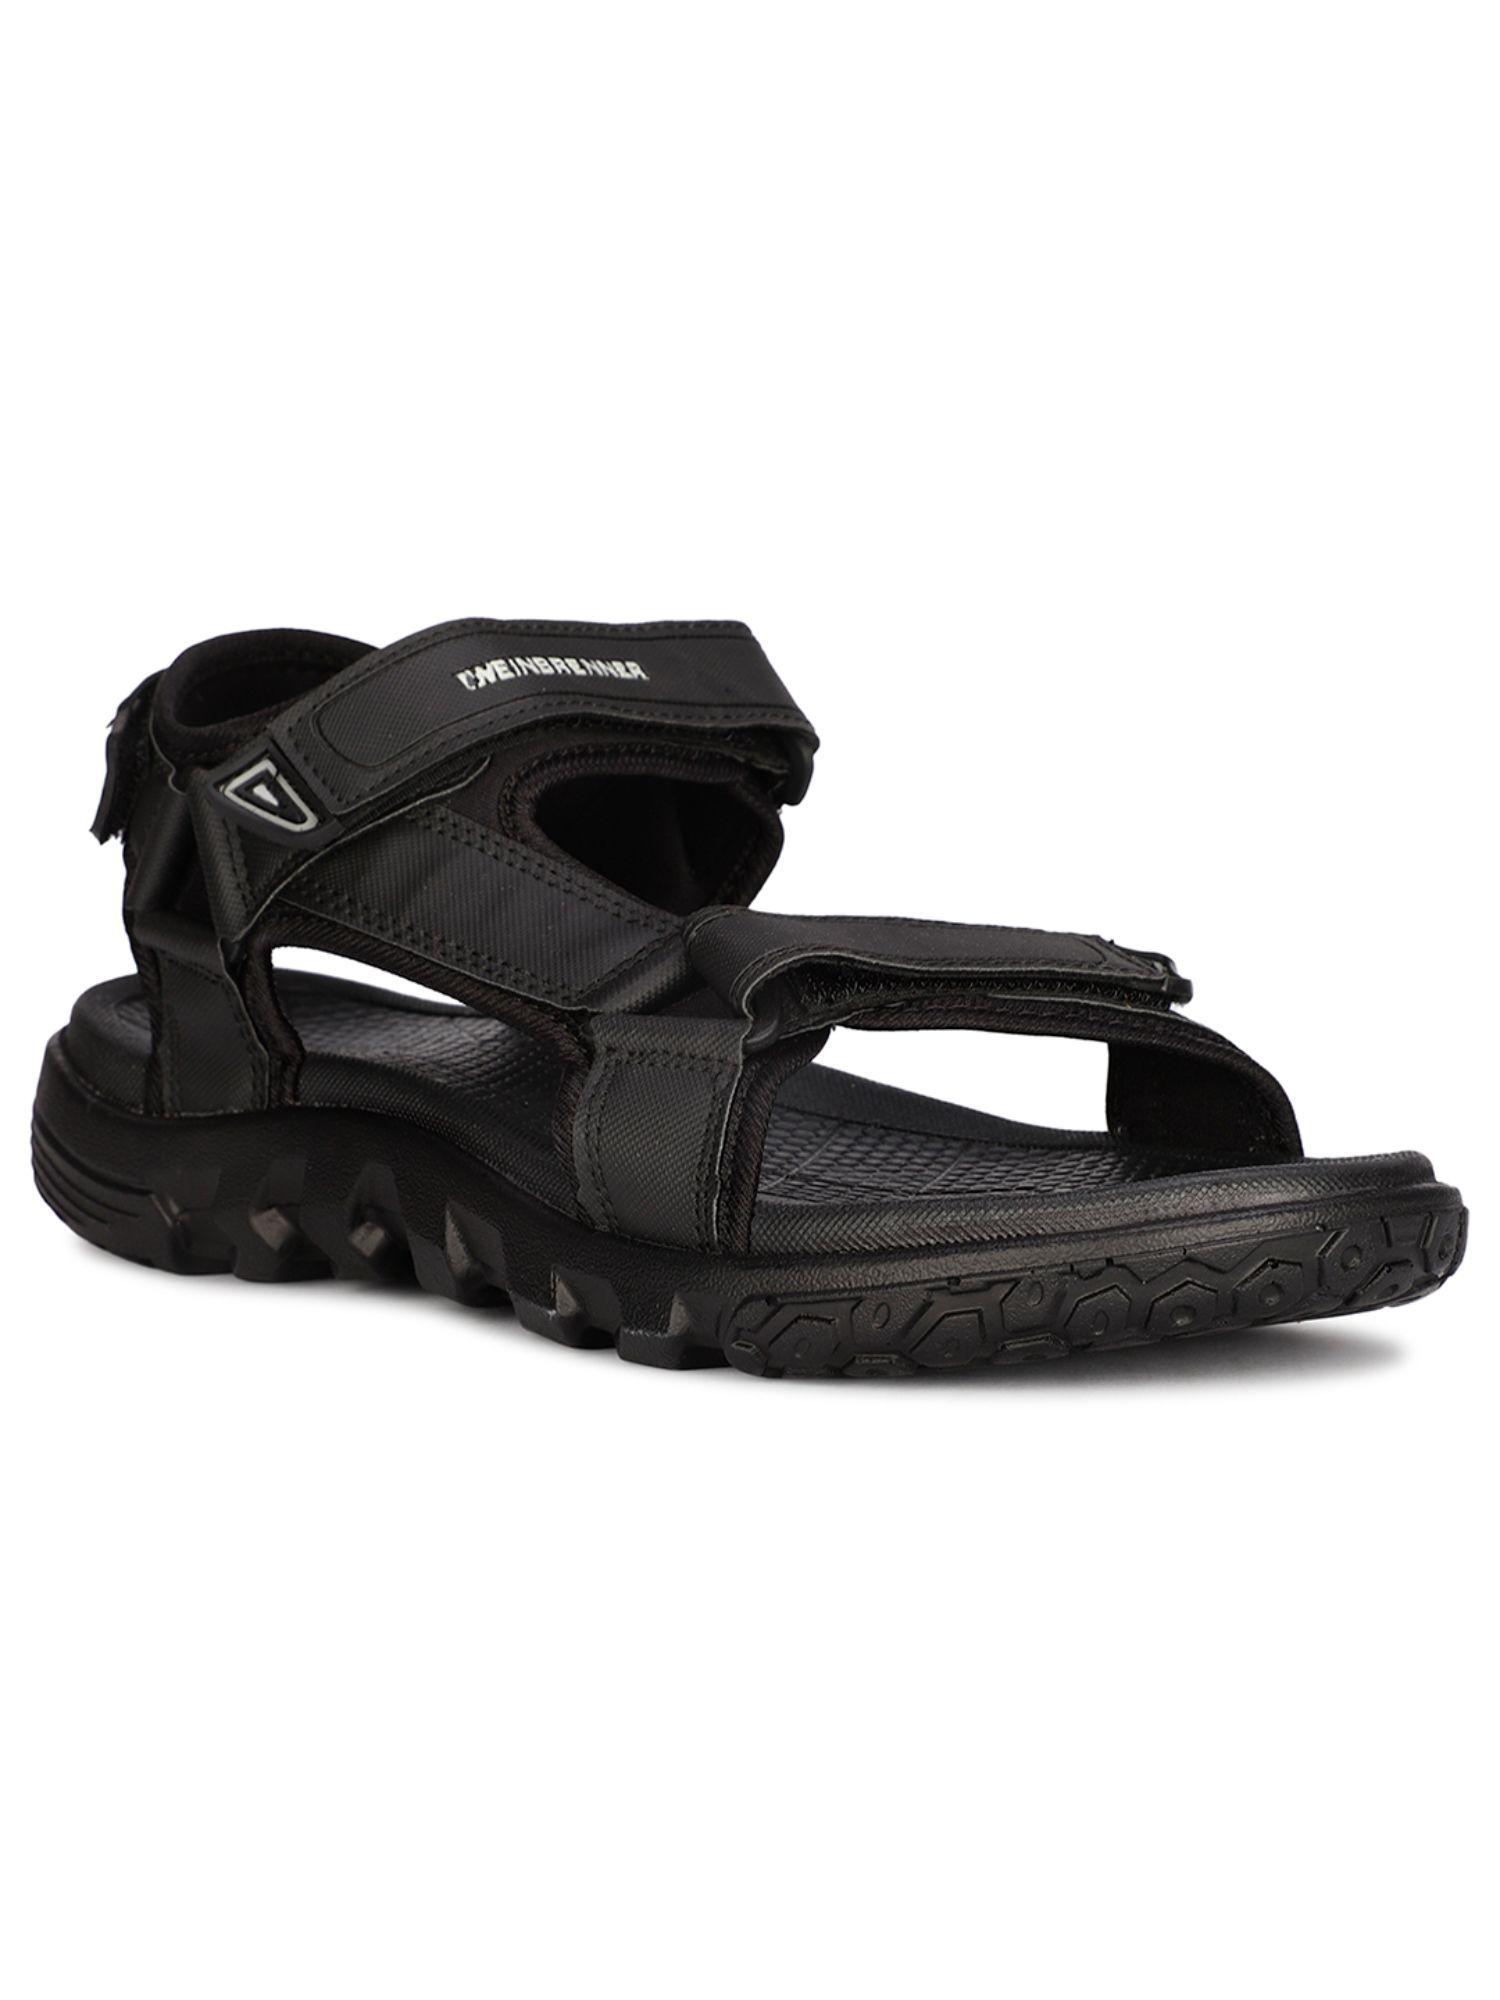 mens black velcro casual sandals